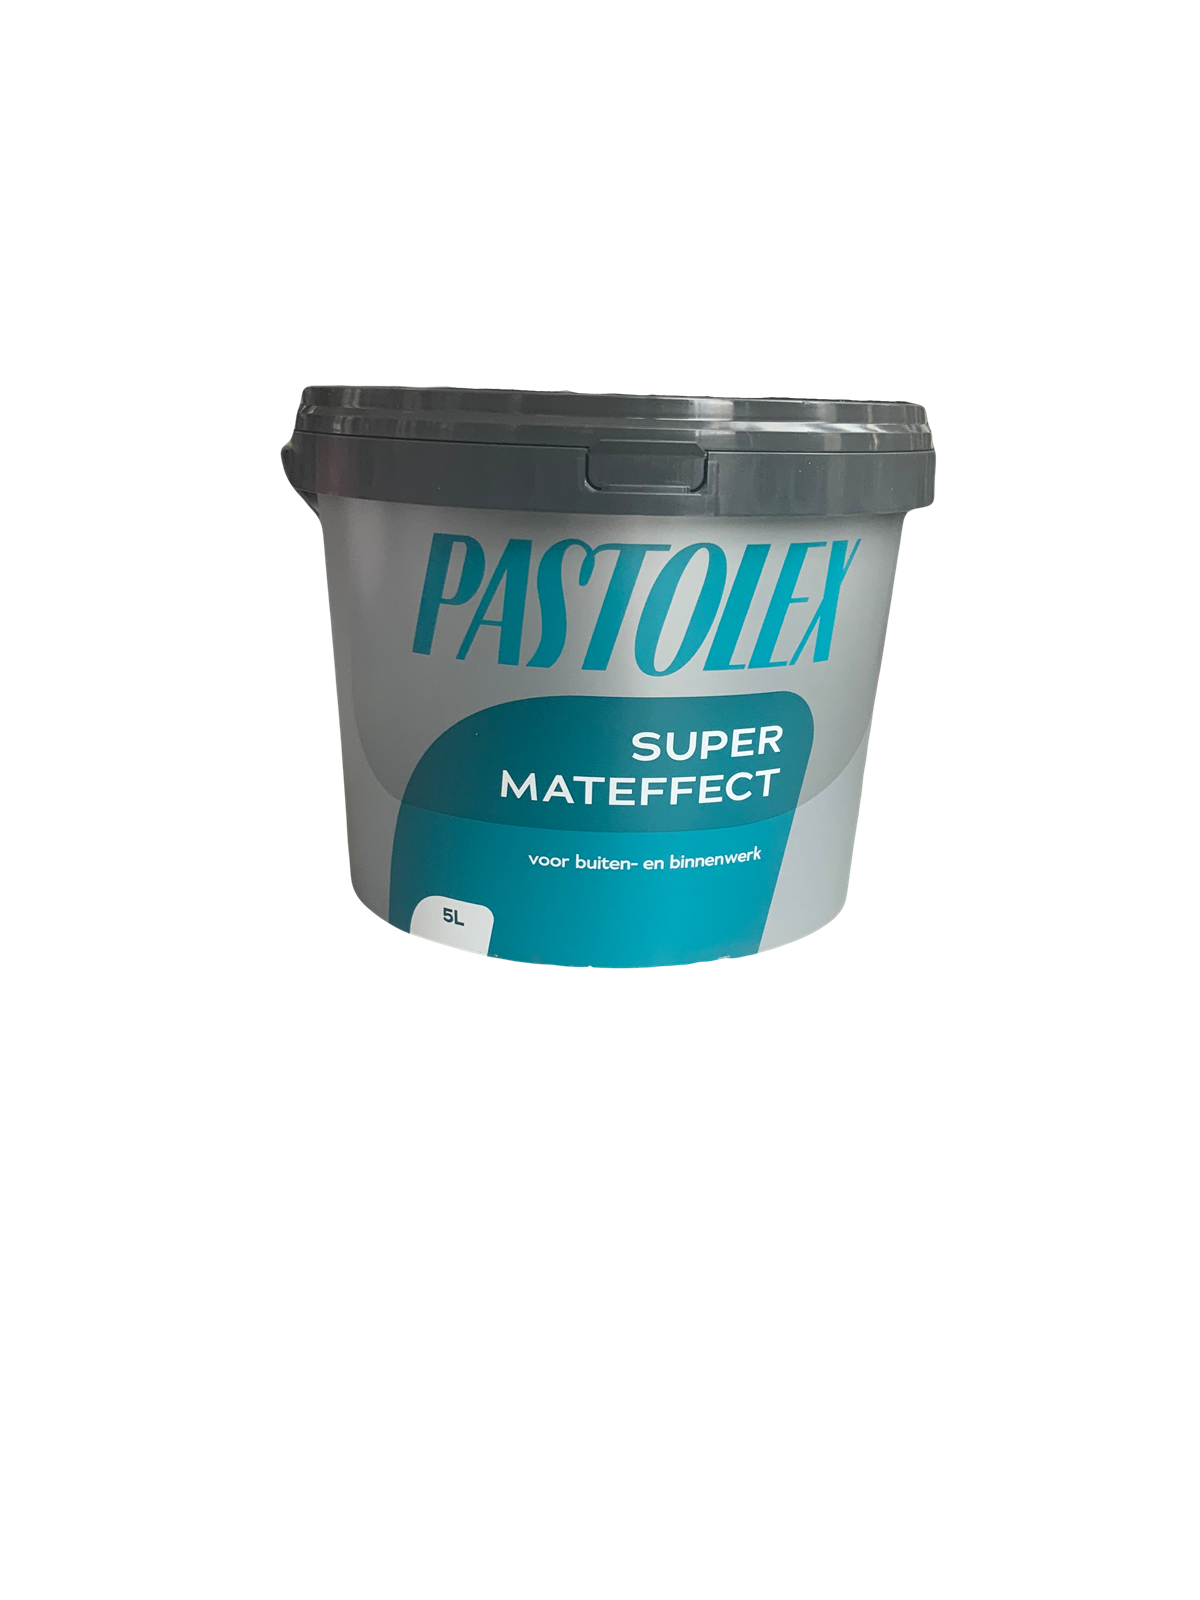 Pastolex Super Mateffect - Muurverf - Dekkend - Water basis - Wit